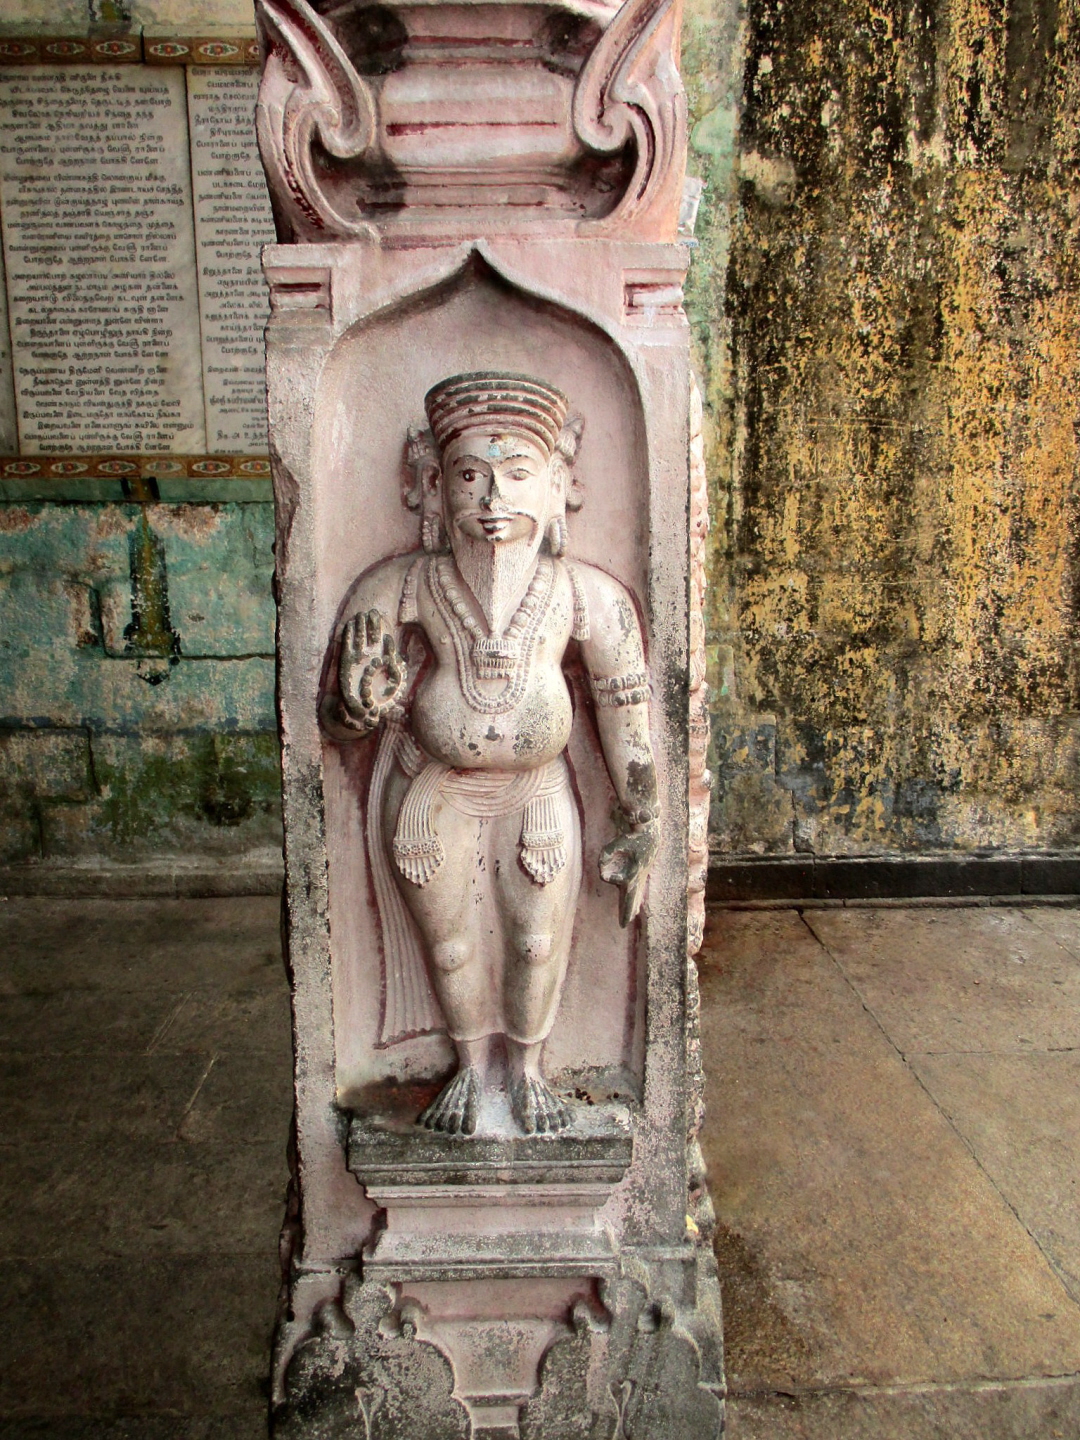 Statue of a Siddha, Vaithiswarankoil, Tamil Nadu, India